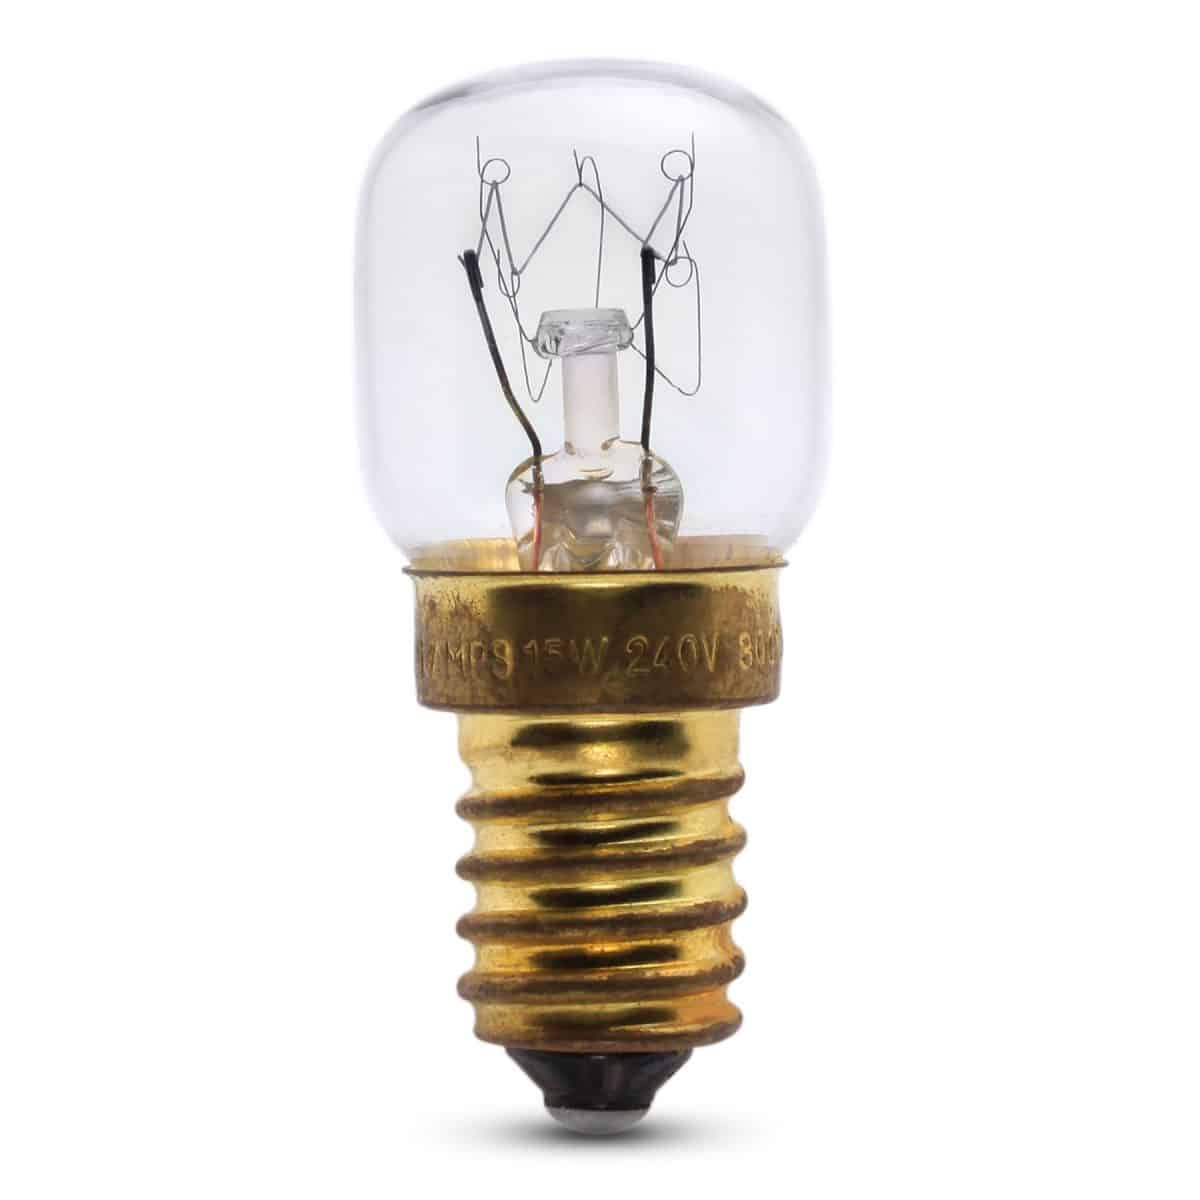 HOTPOINT Oven Lamp Bulb 300C E14  G & E 25W 41-GE-04 